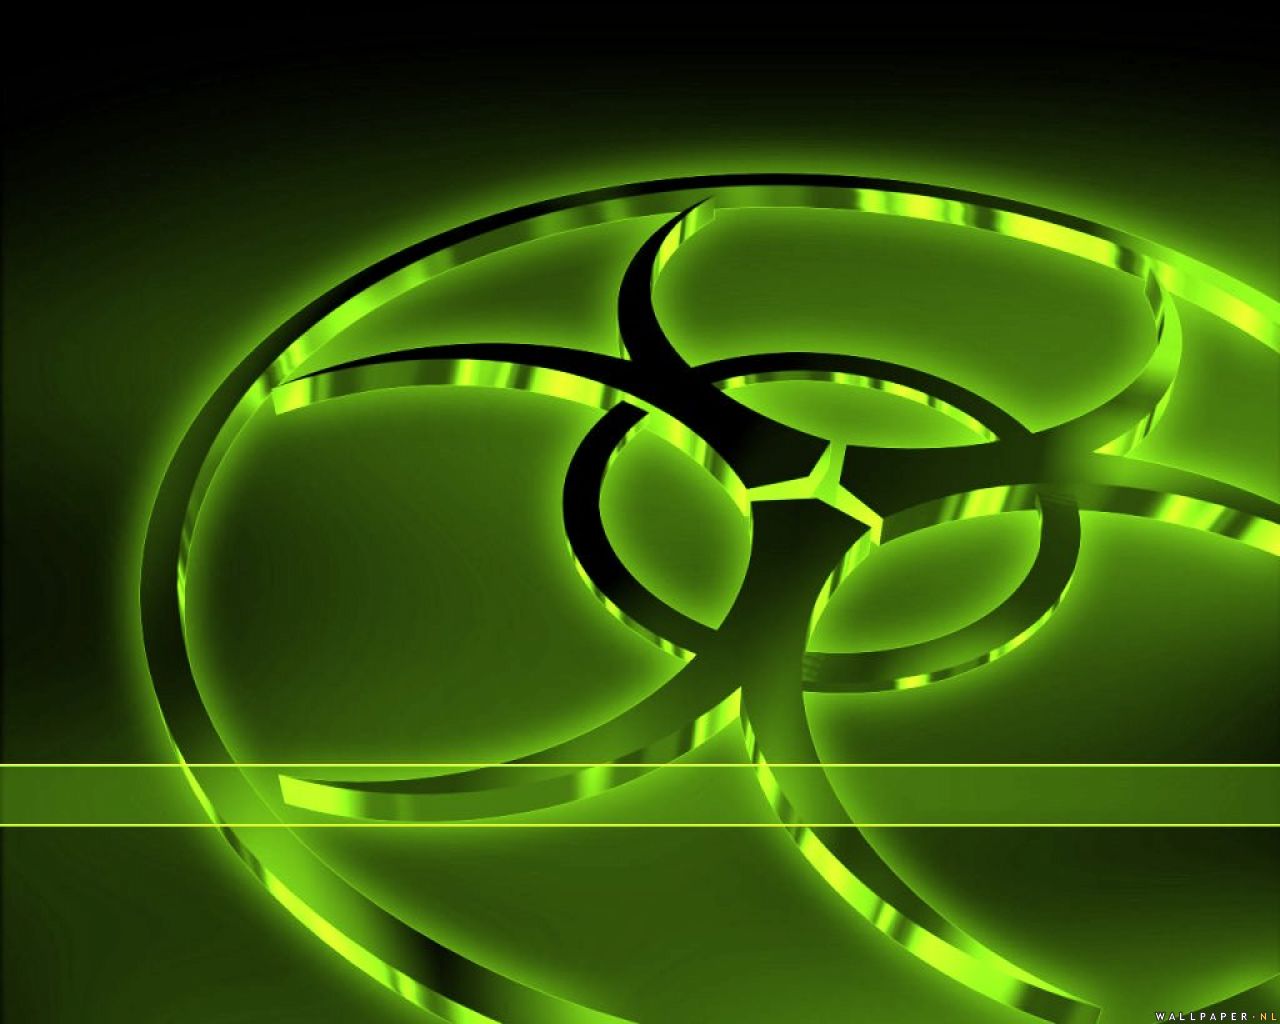 biohazard symbol green